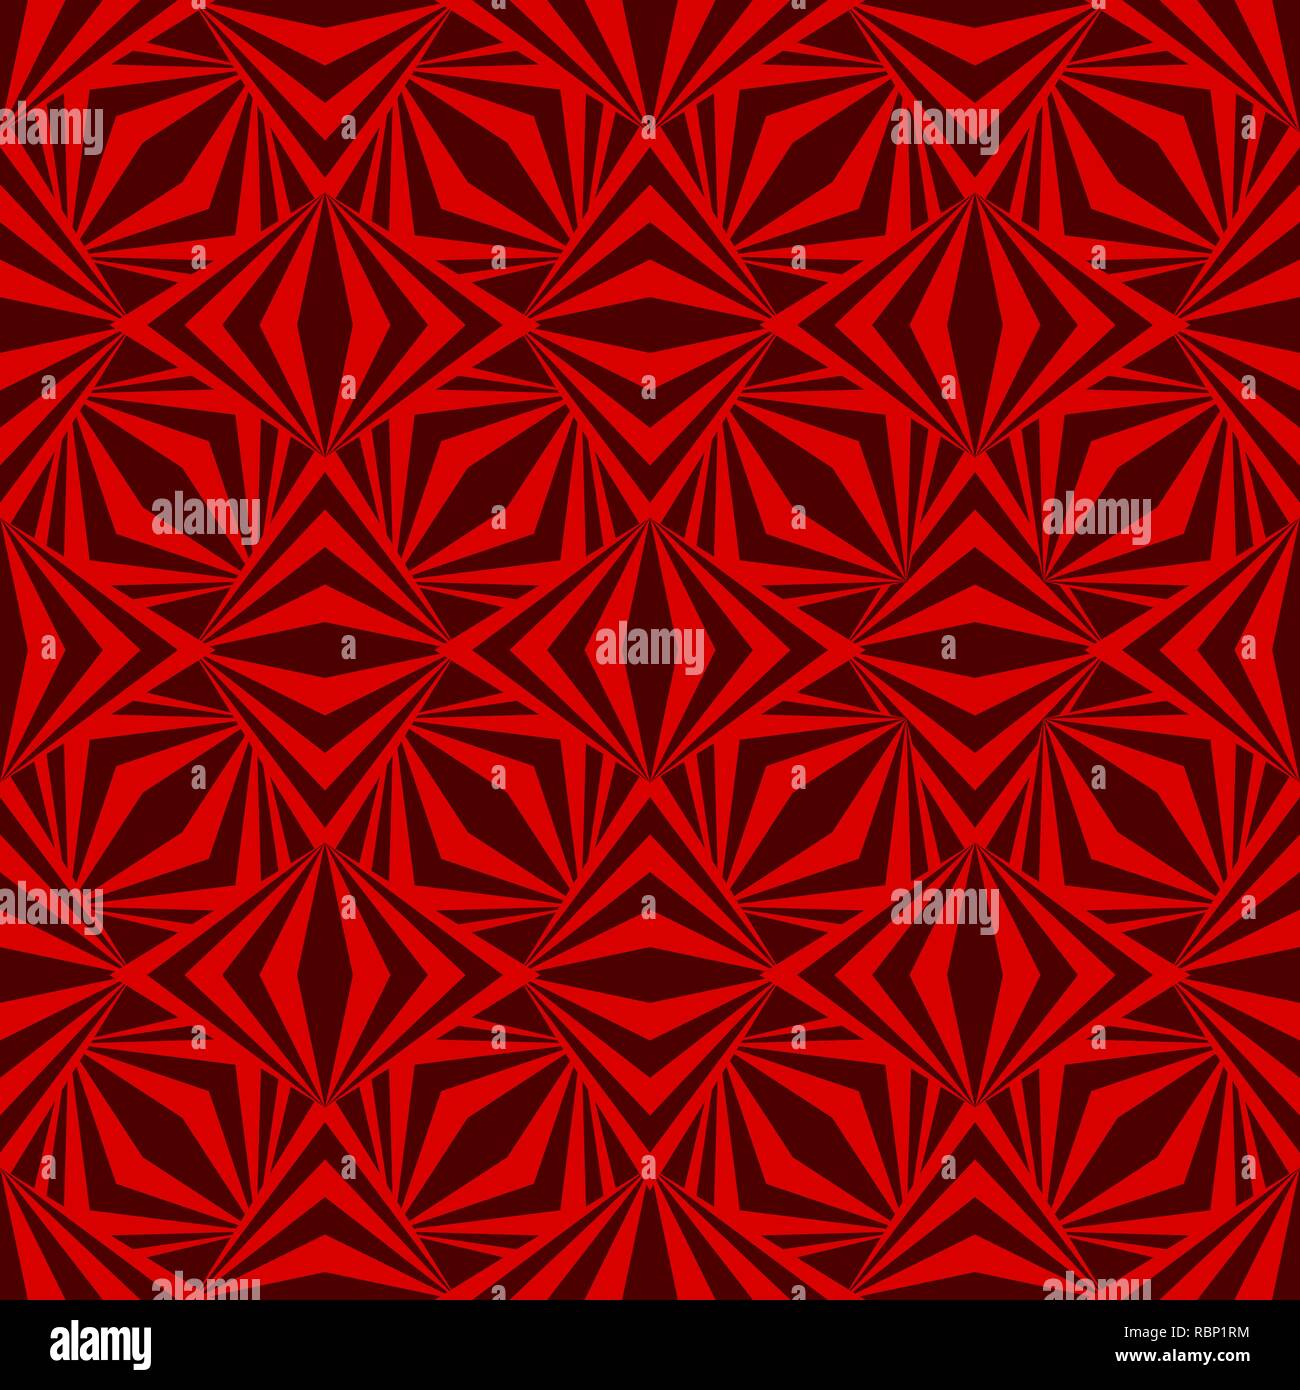 Art abstract geometric dark red romb pattern Stock Vector